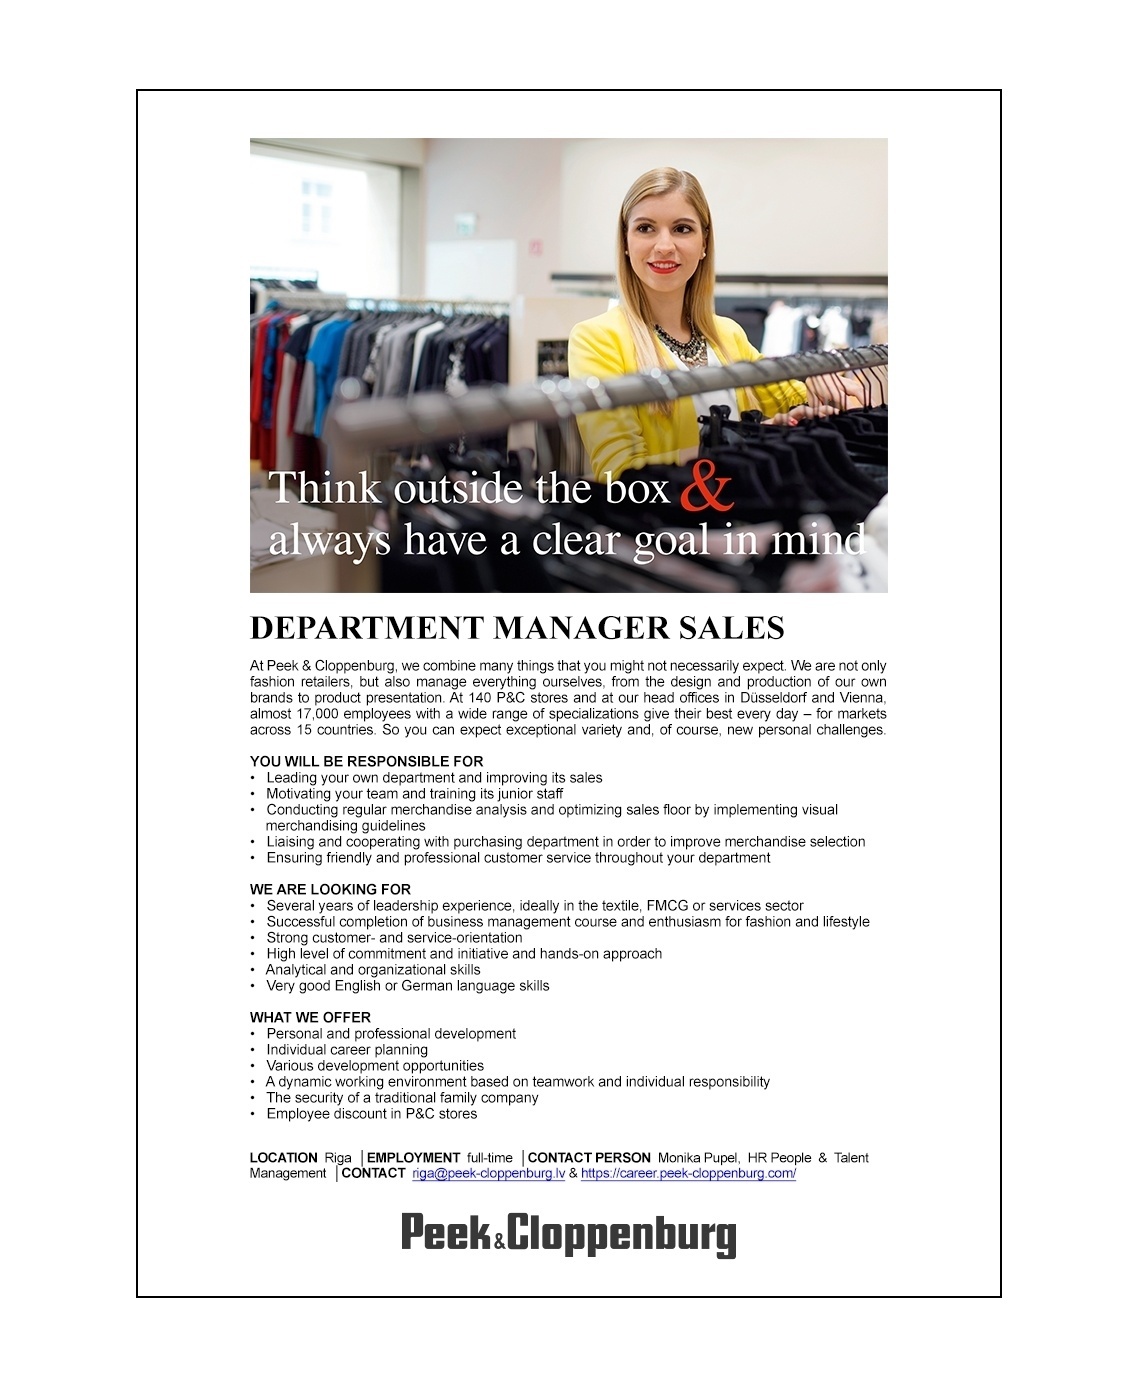 Trendmark, SIA Department Manager Sales